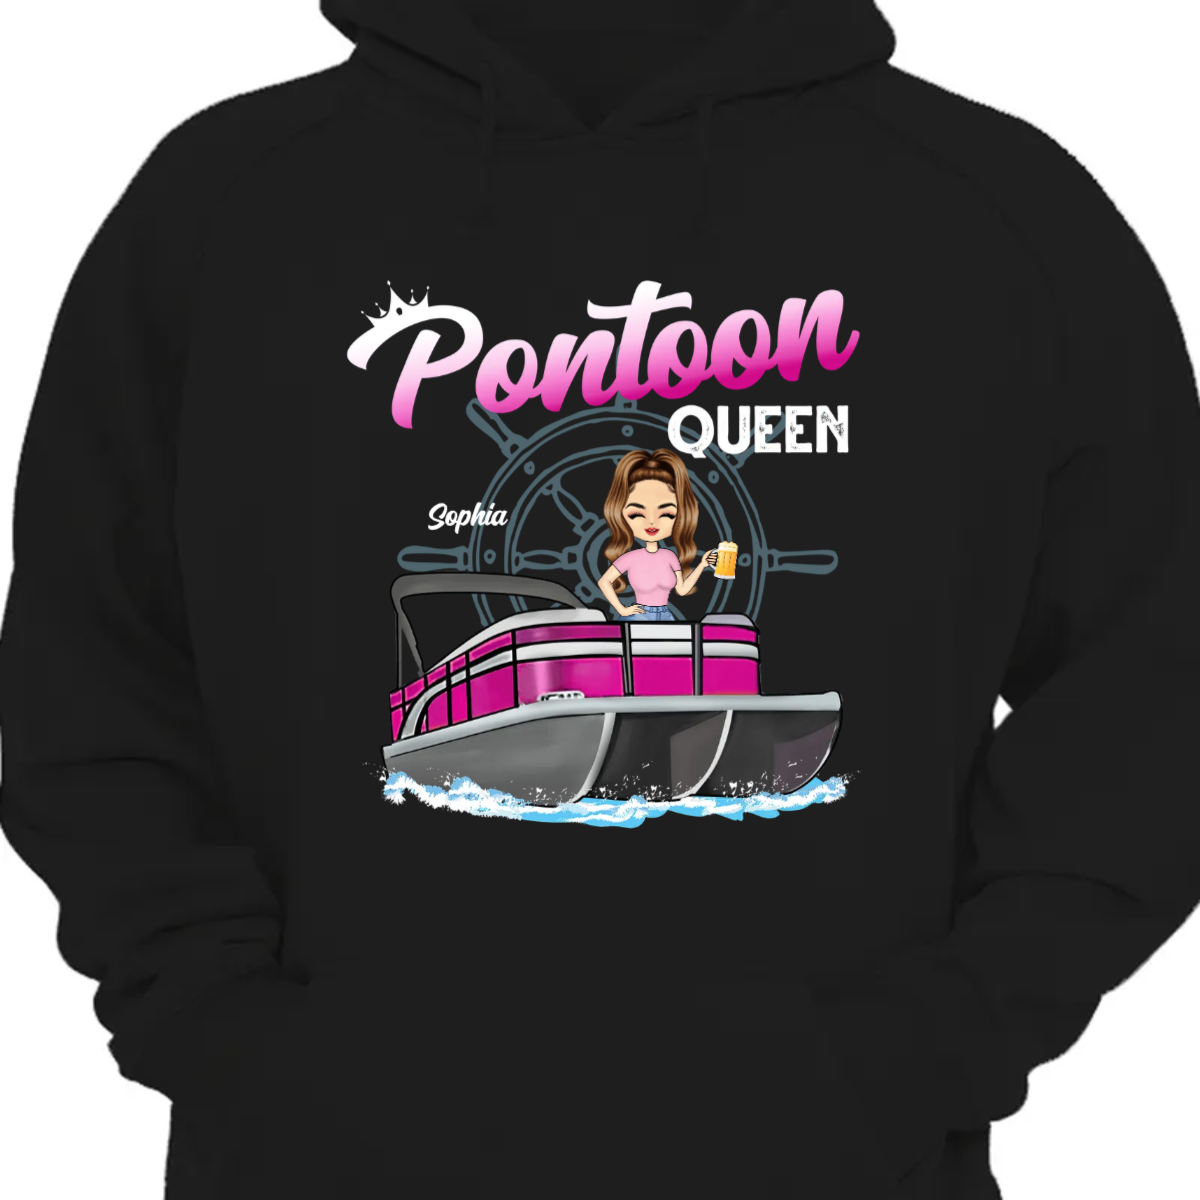 Boating Pontoon Queen - Birthday Gift For Pontooning Lovers, Lake Lovers, Travelers, Women - Personalized Custom Hoodie